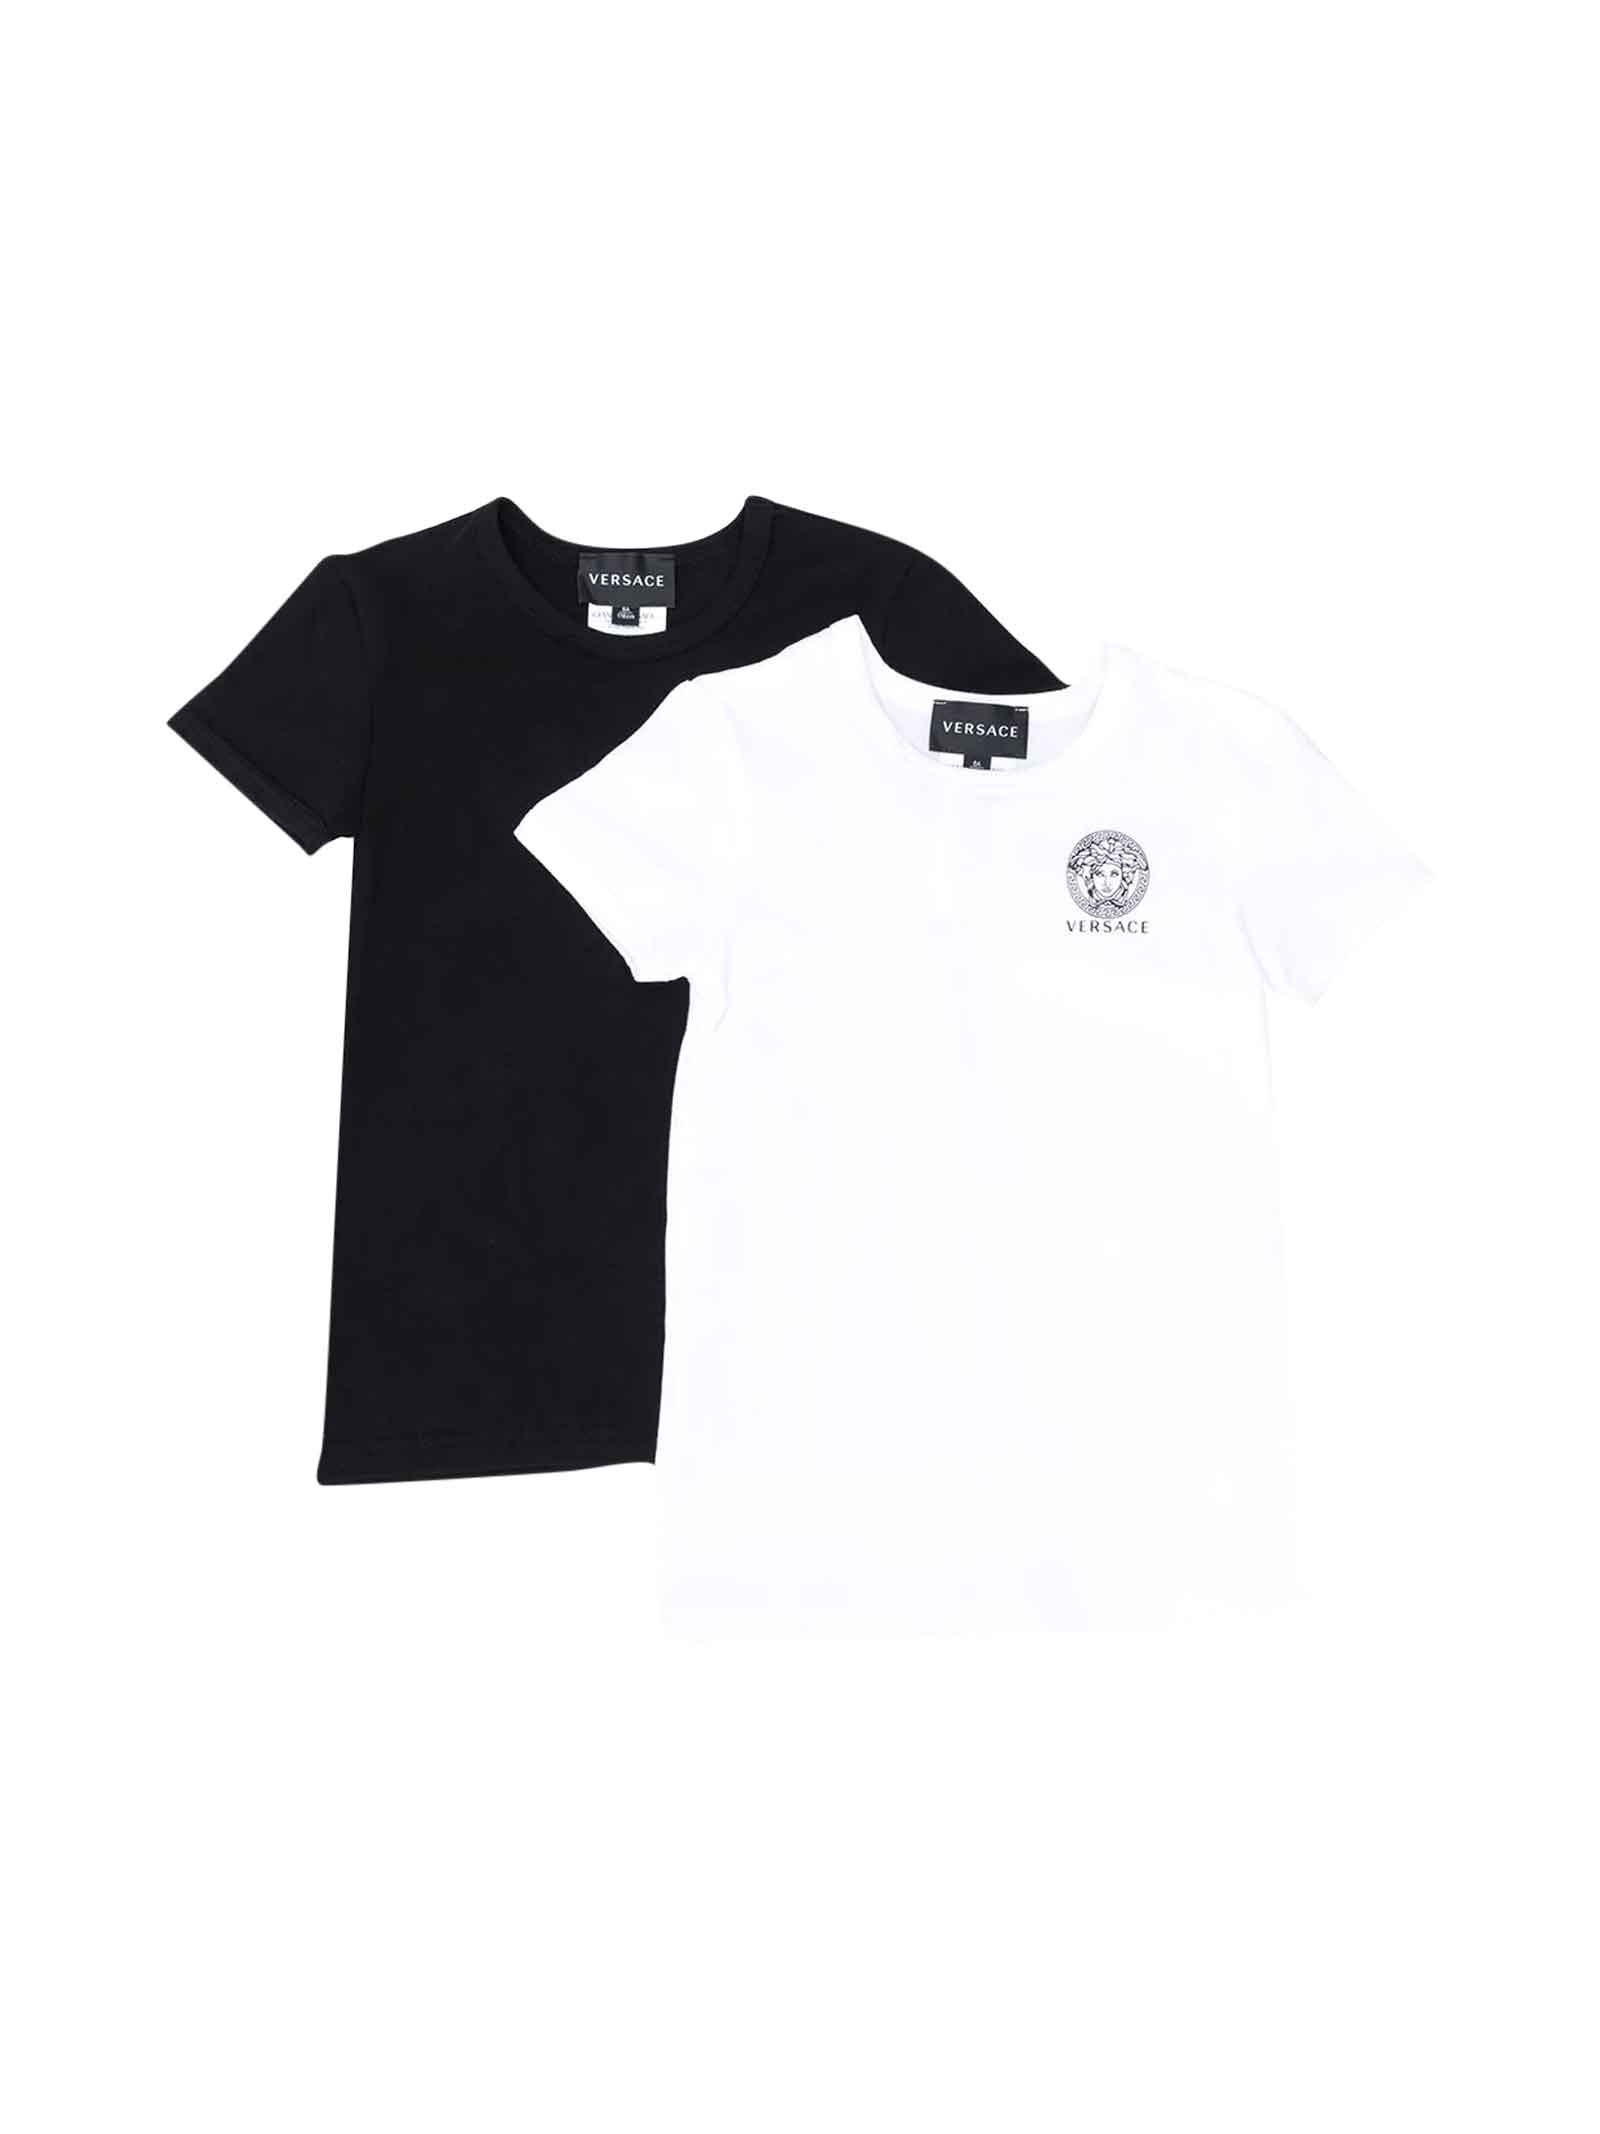 Versace Unisex Black And White T-shirt Set